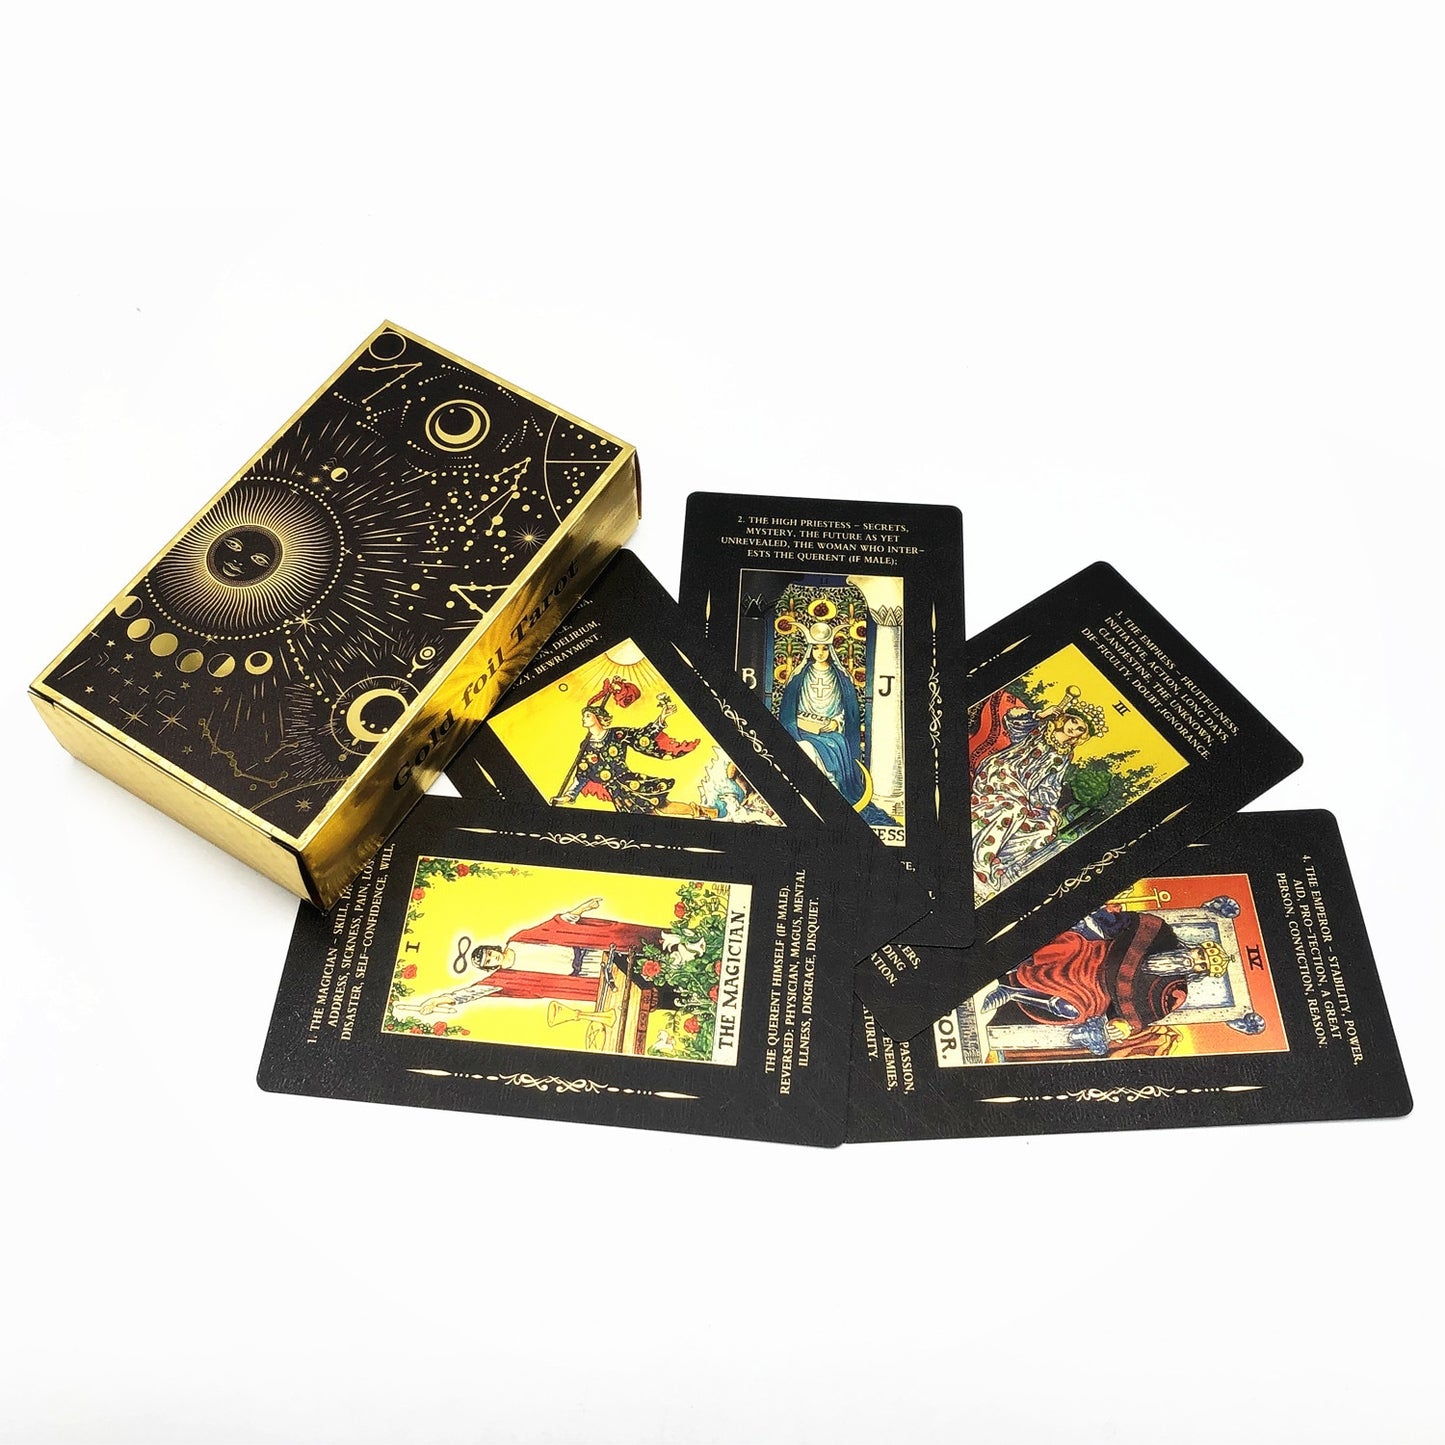 Astro Gold Foil Tarot Card Decks (Full & Learners Decks)